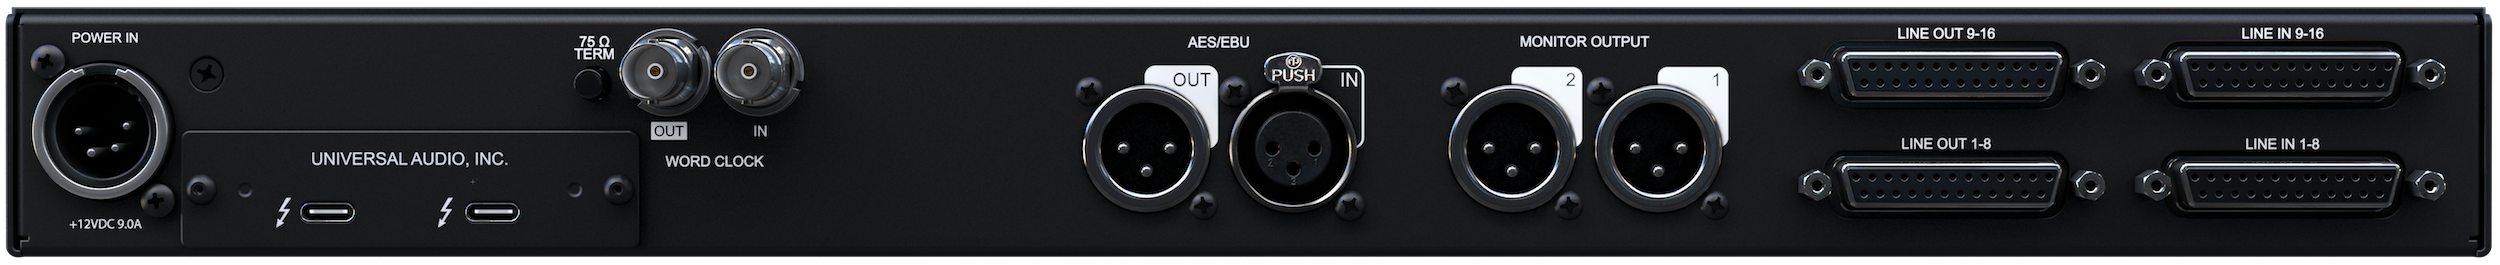 Universal Audio Apollo X16 Heritage Edition - Interface de audio thunderbolt - Variation 1